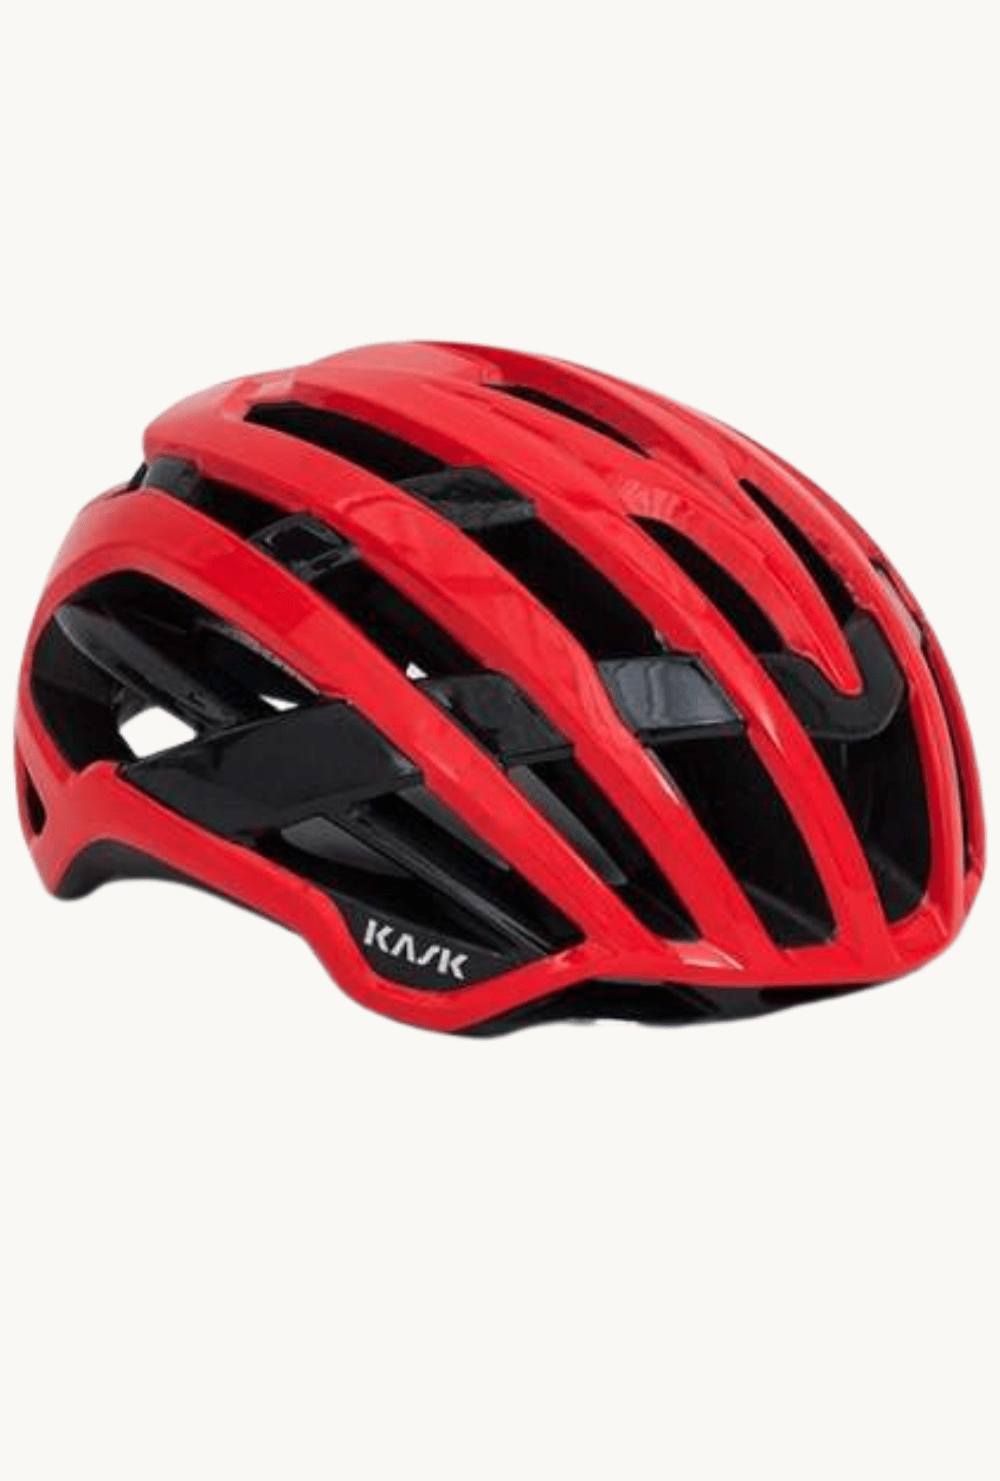 Helmet - Kask Valegro RedMedium / Red from Pearson Cycles